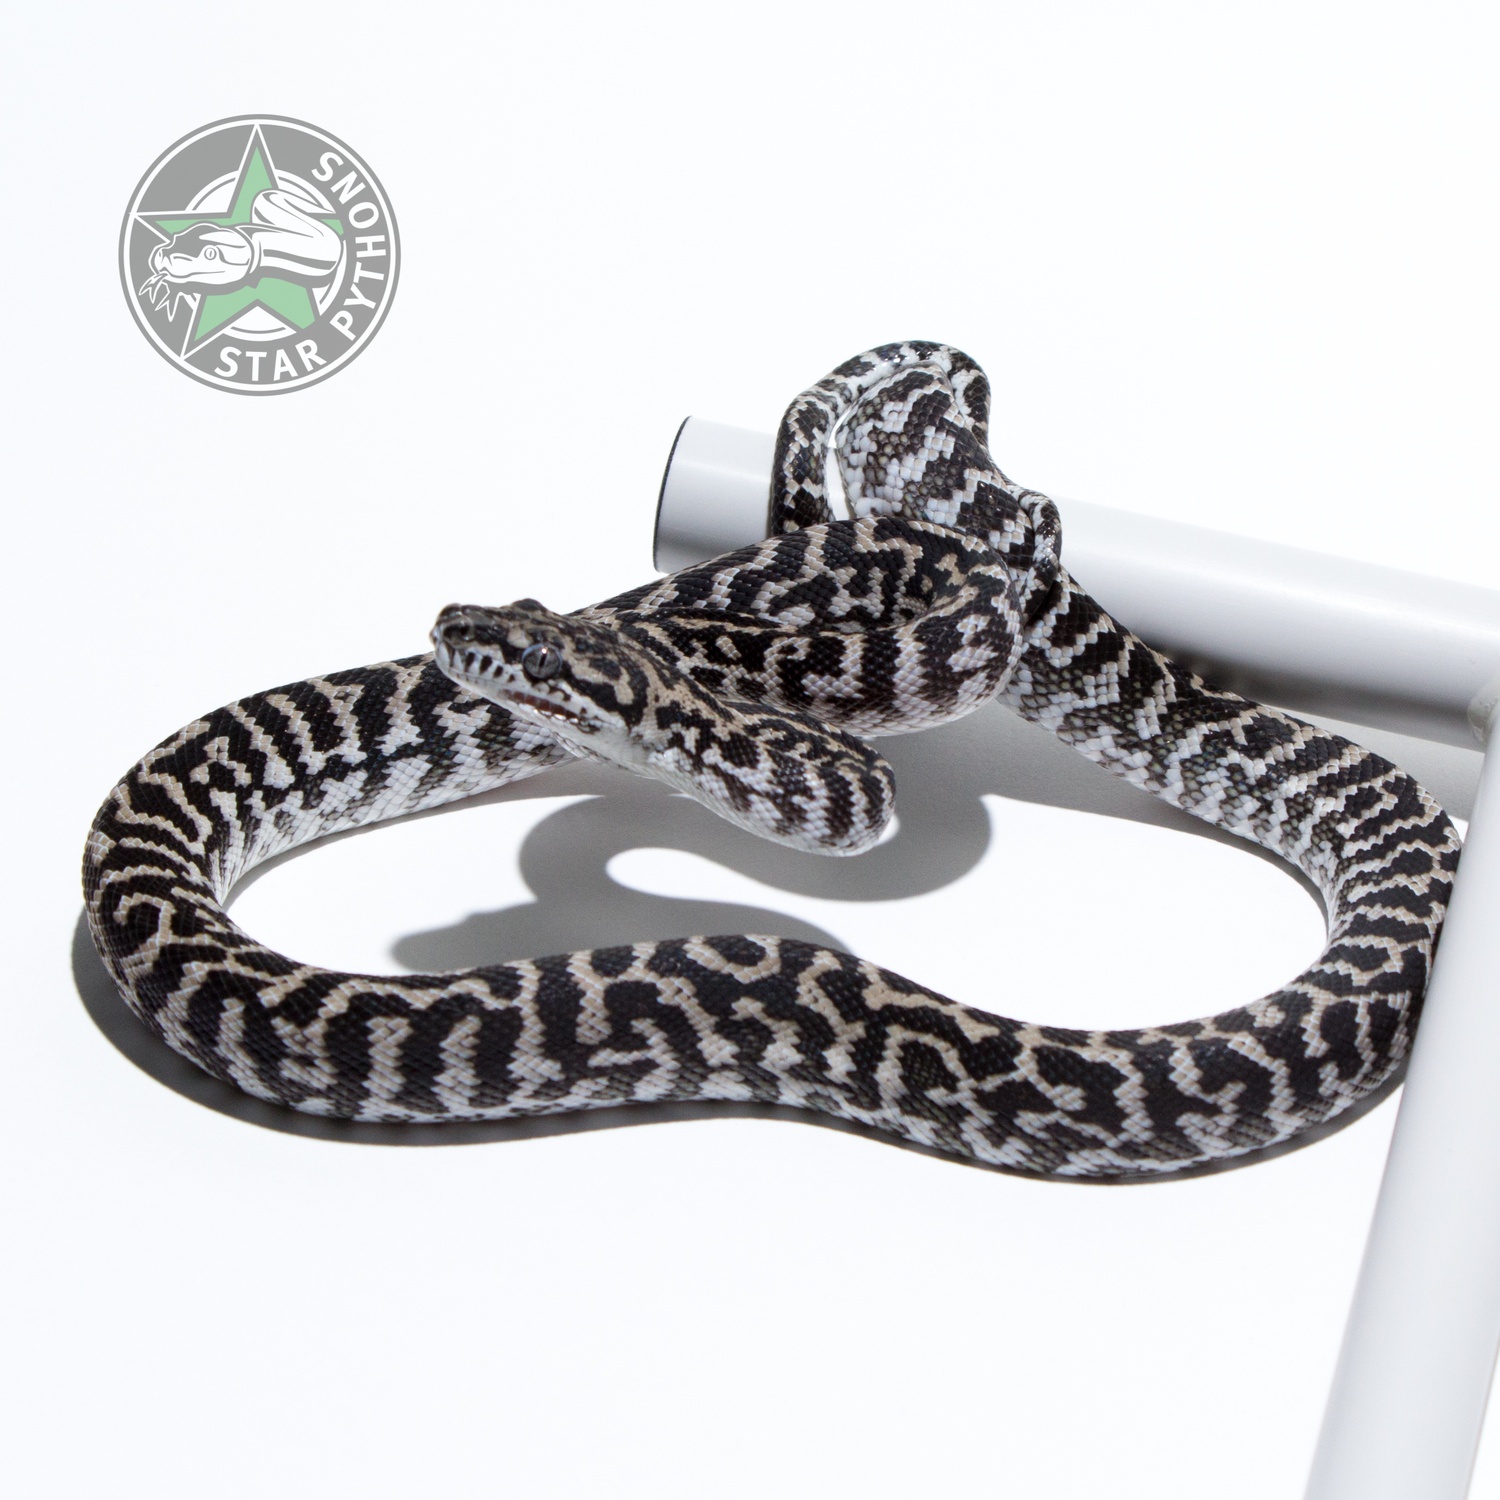 Axanthic Zebra Male 2015 Other Carpet Python by StarPythons Inc.